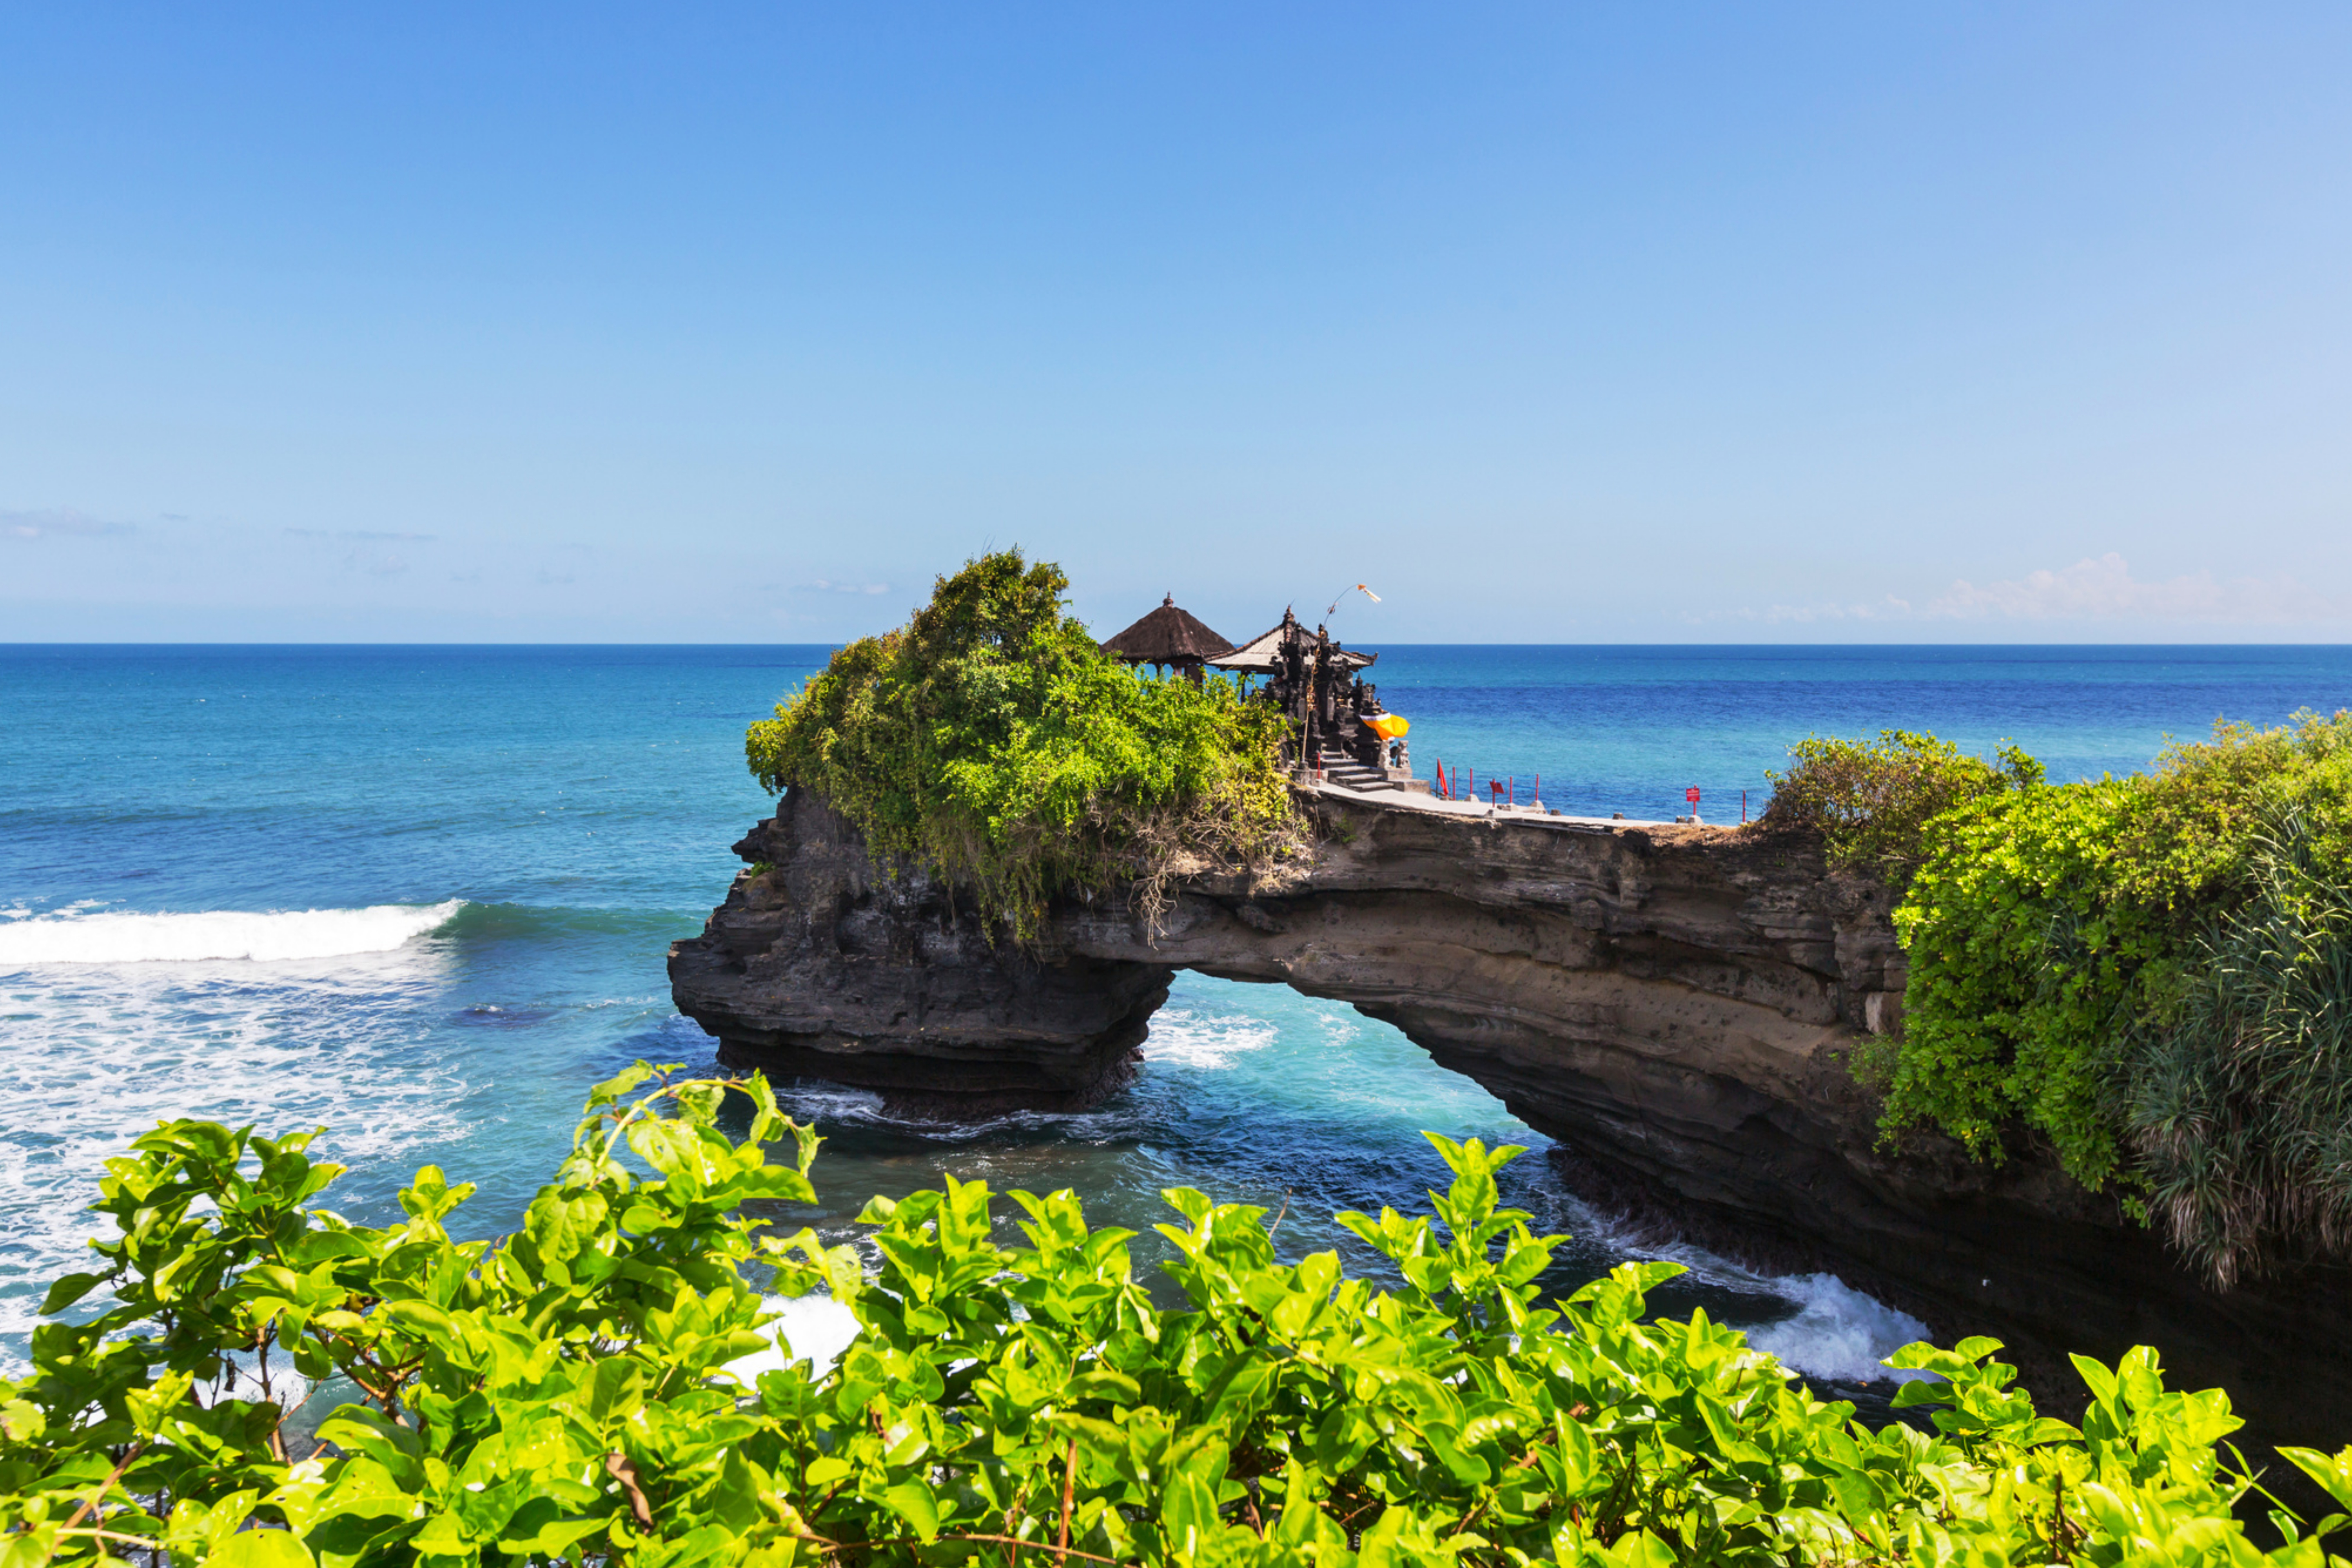 14. Bali, Indonesia